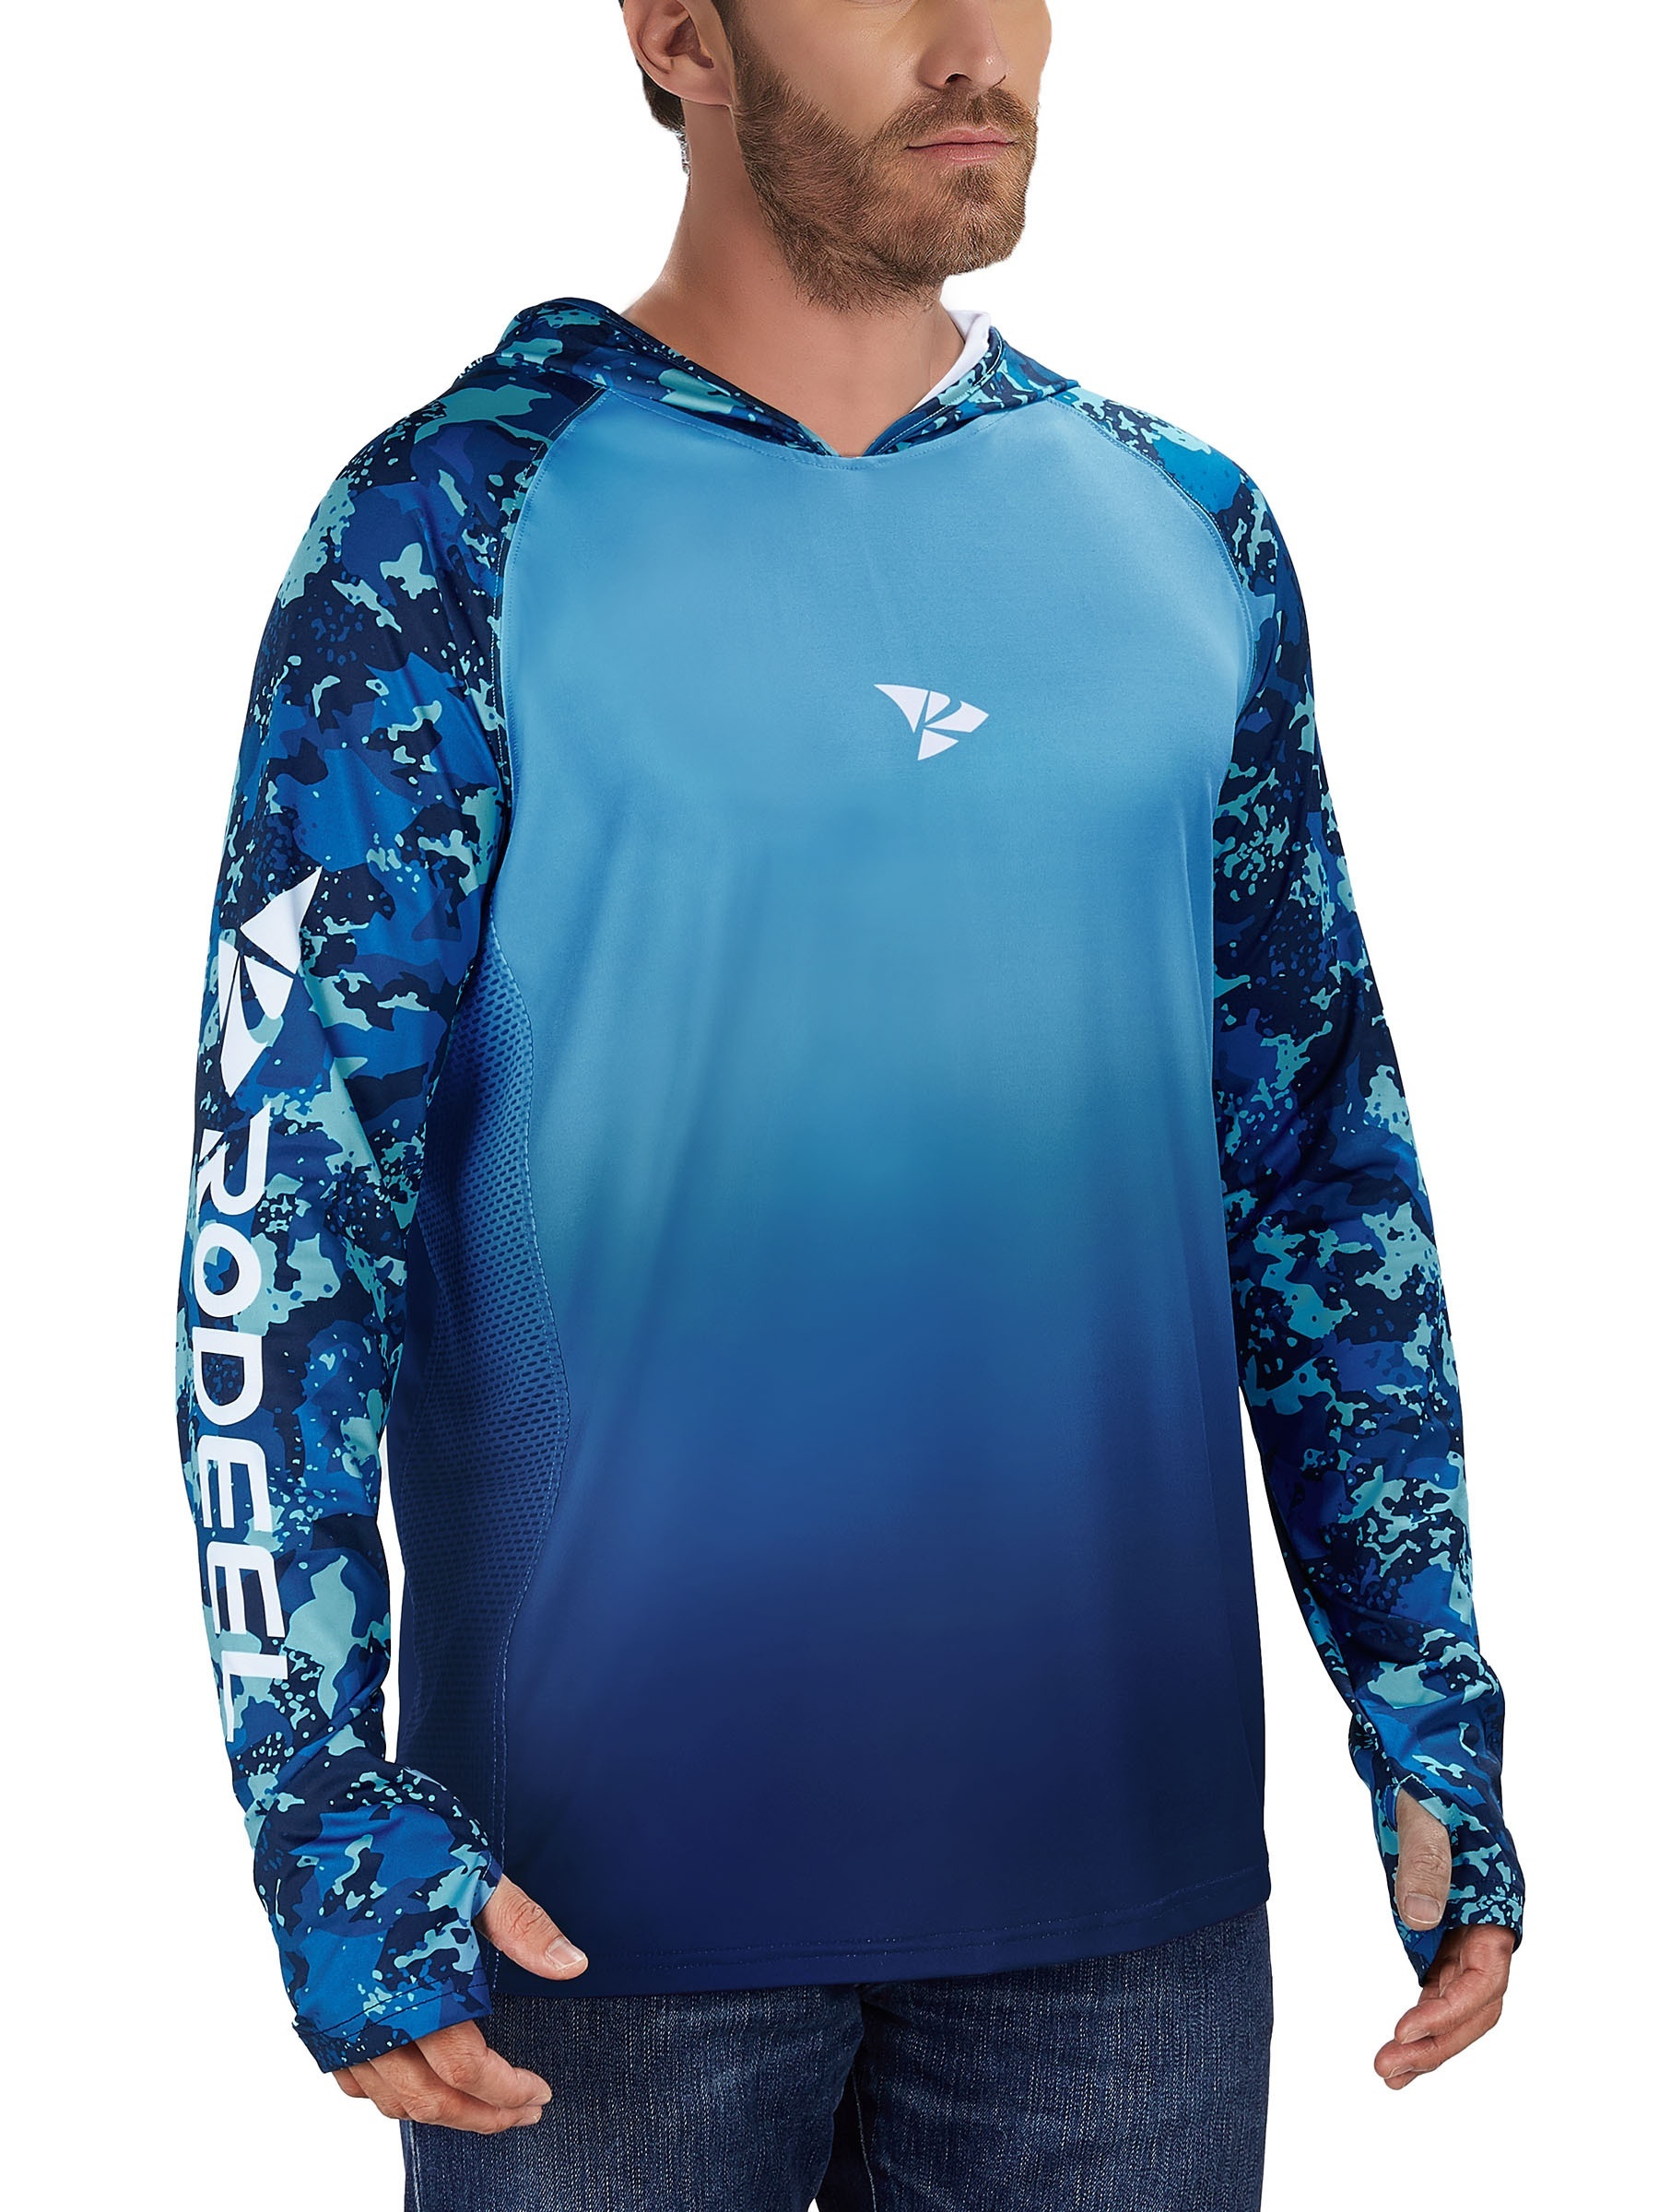 Youth Hooded Long Sleeve Fishing Shirt SeaGuard™ UPF 50+ • 1 Print – BRINY